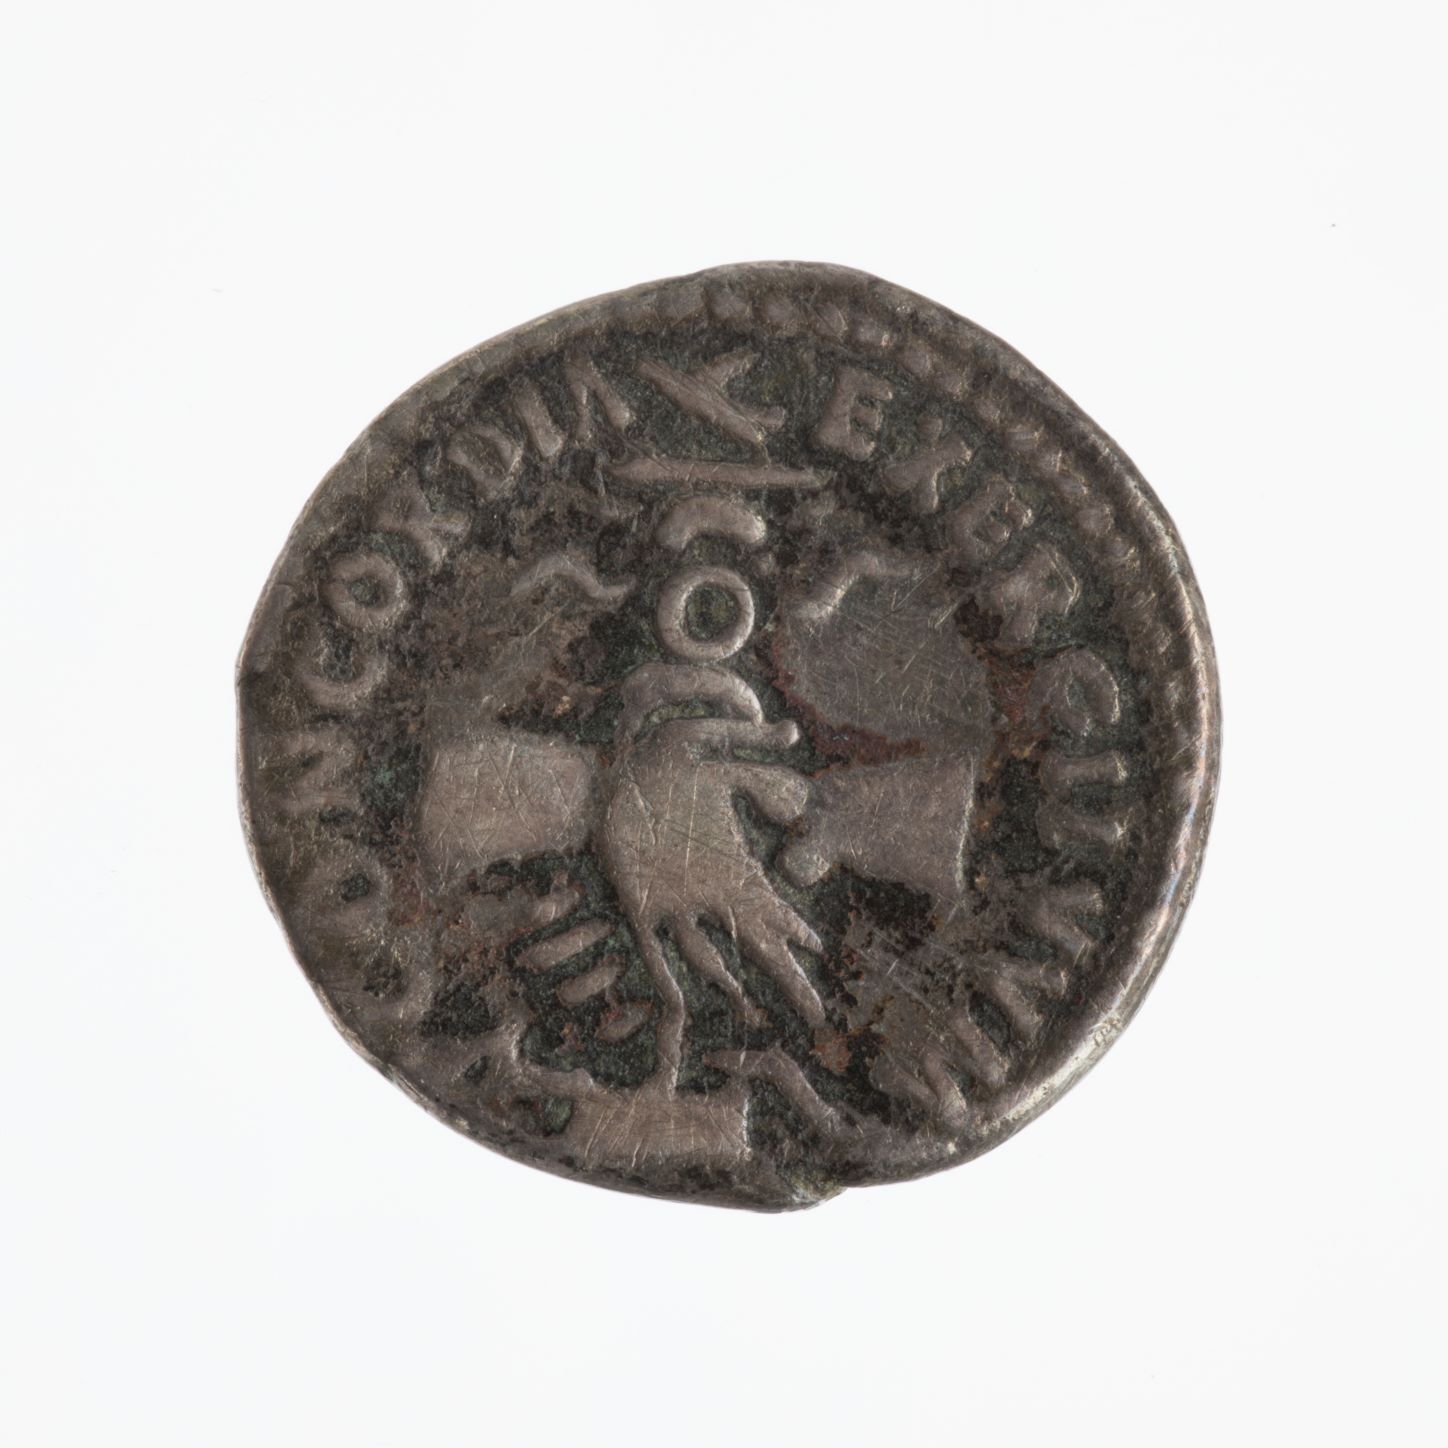 39: Coin of Roman Emperor Nerva and solar eclipses